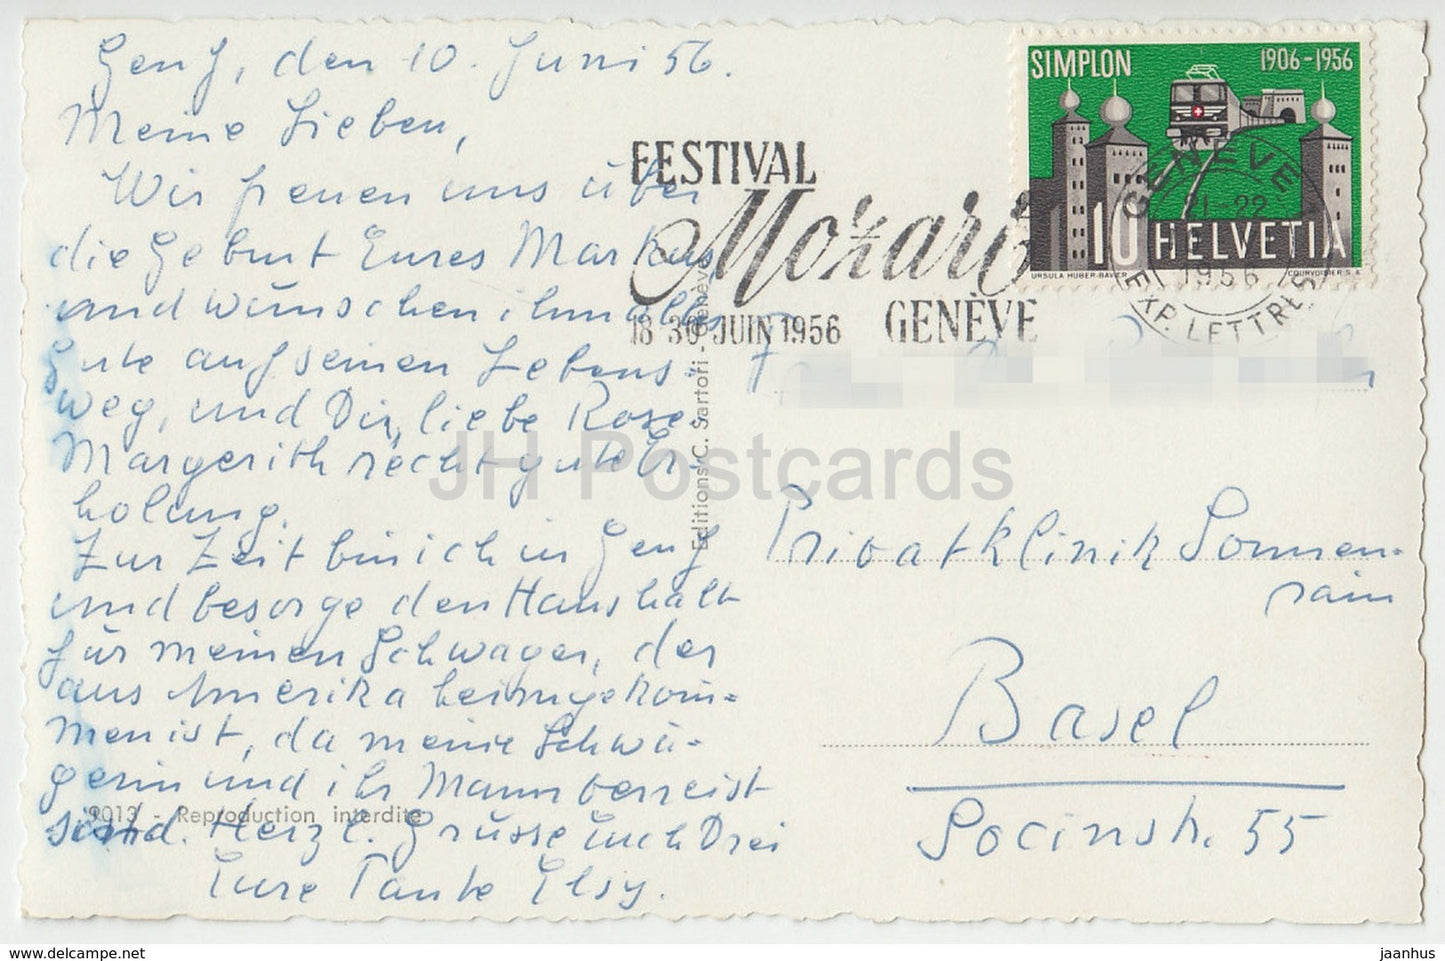 Genf - Geneve - Hotel de la Paix - Denkmal Brunswick et ville - Brücke - 1956 - Schweiz - gebraucht